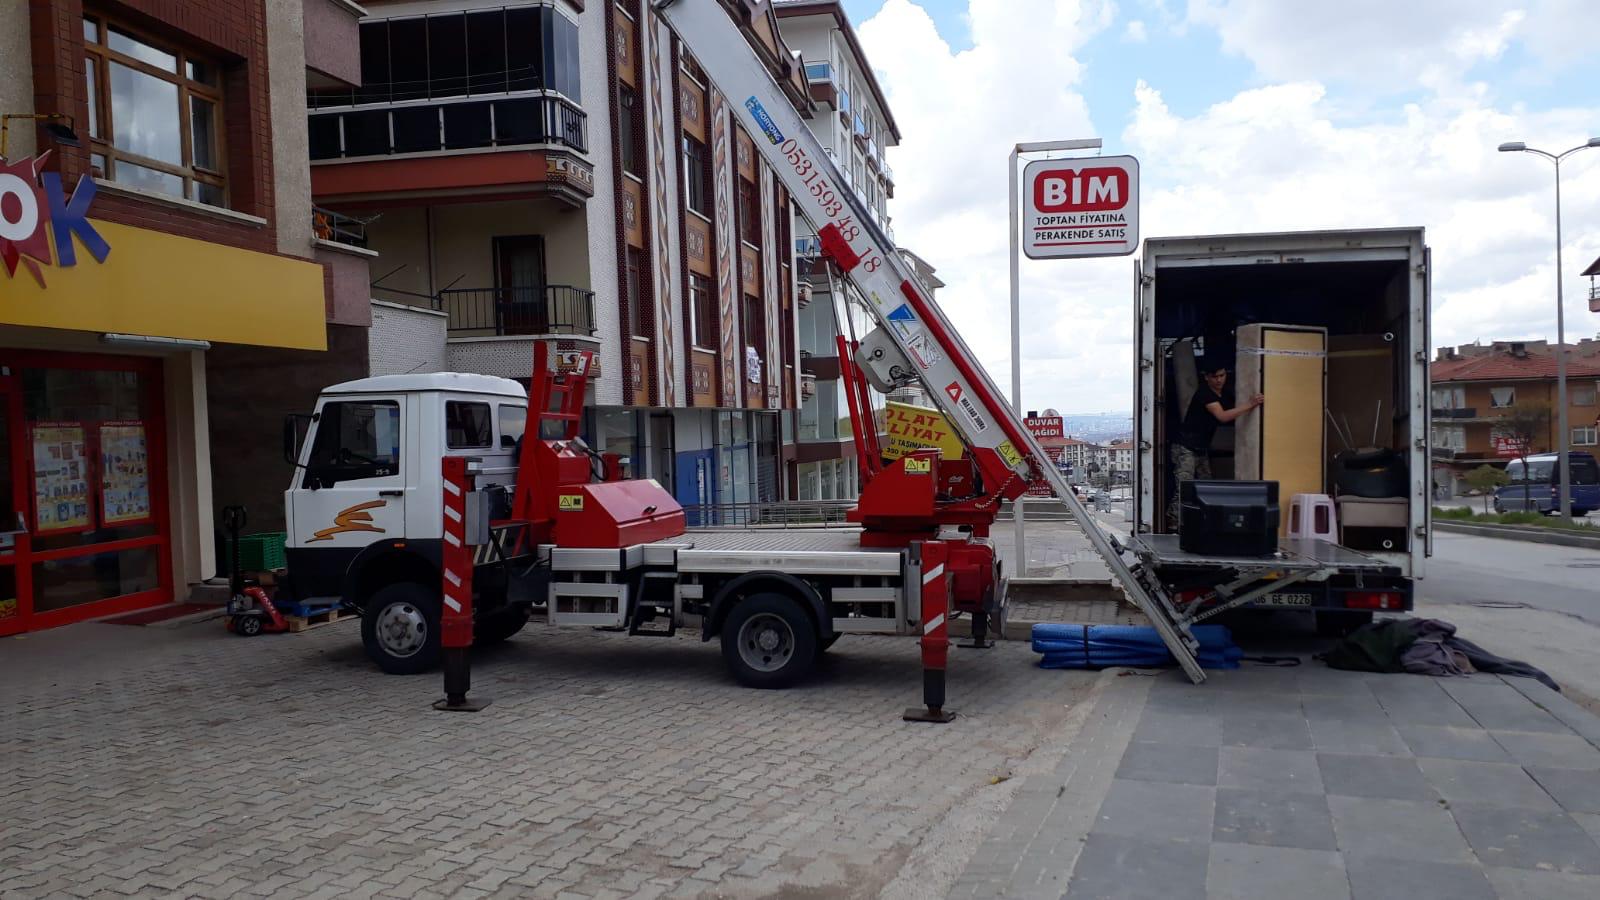 Ankara Kiralık Asansör Ankarada Asansör kiralama Kiralık Asansör Ankara Nakliye Asansörü 0531 593 48 18 evden eve